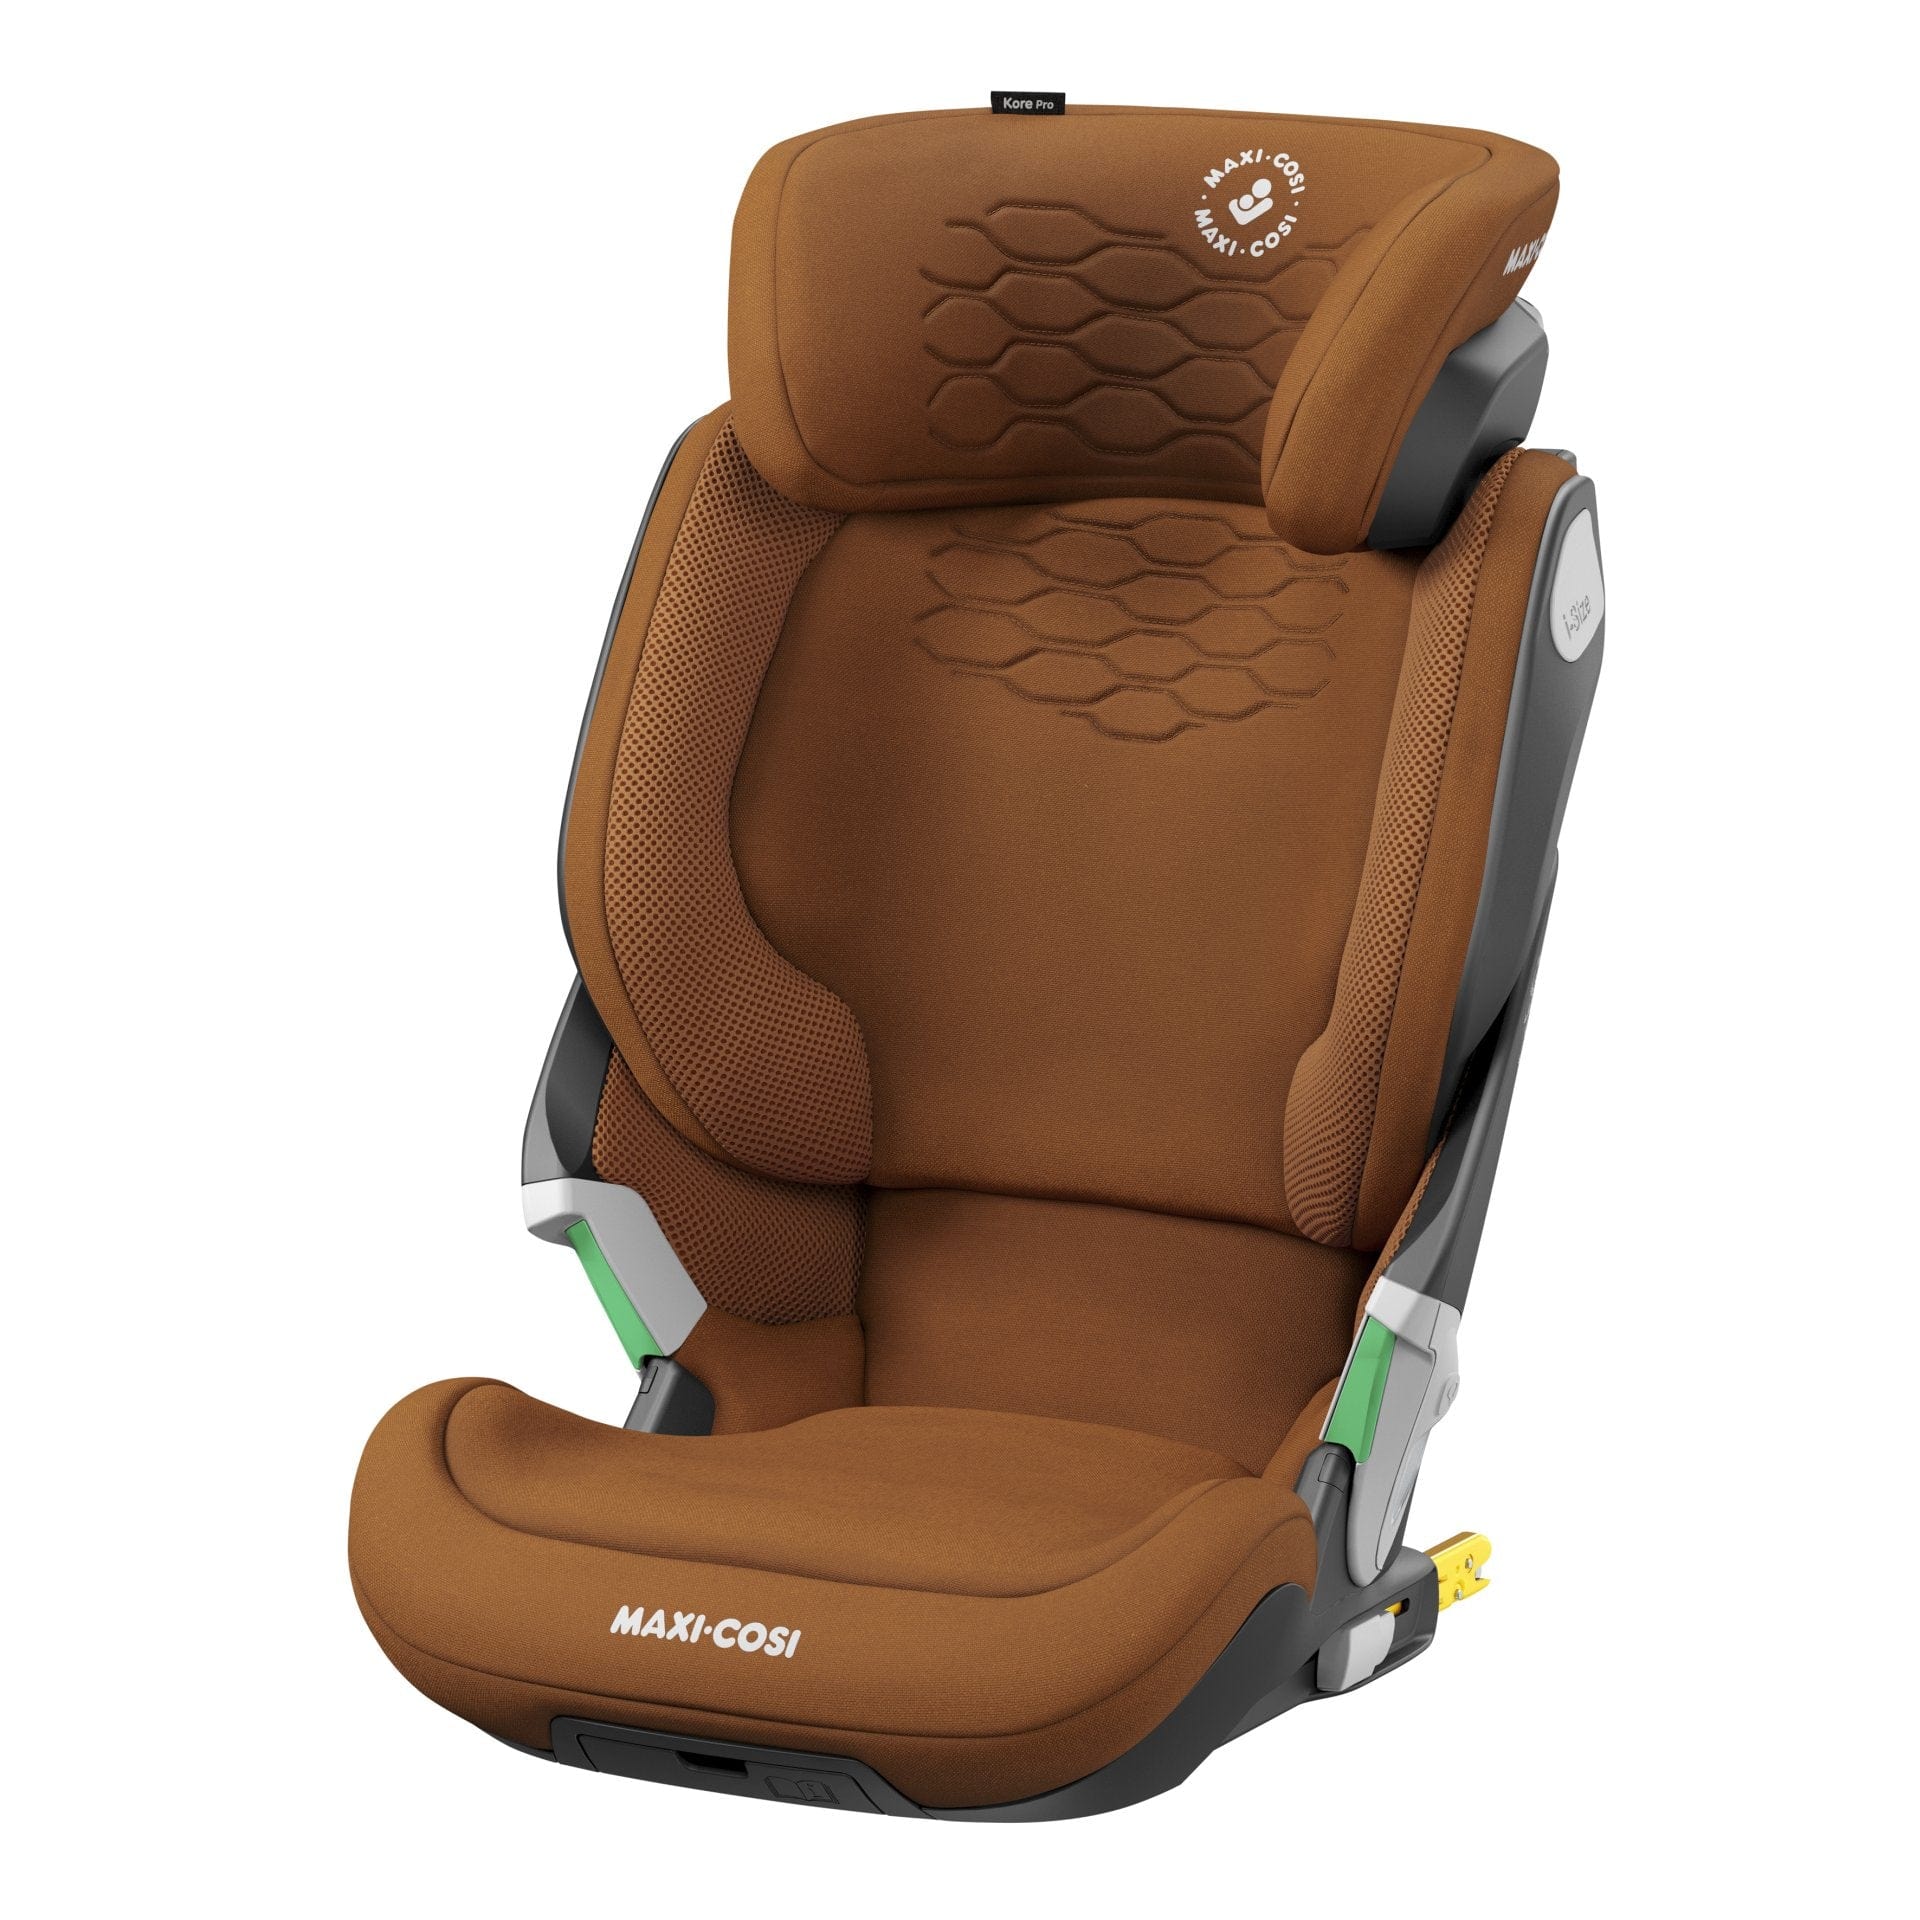 Maxi-Cosi highback booster seats Maxi-Cosi Kore Pro i-Size Car Seat Authentic Cognac 8741650110